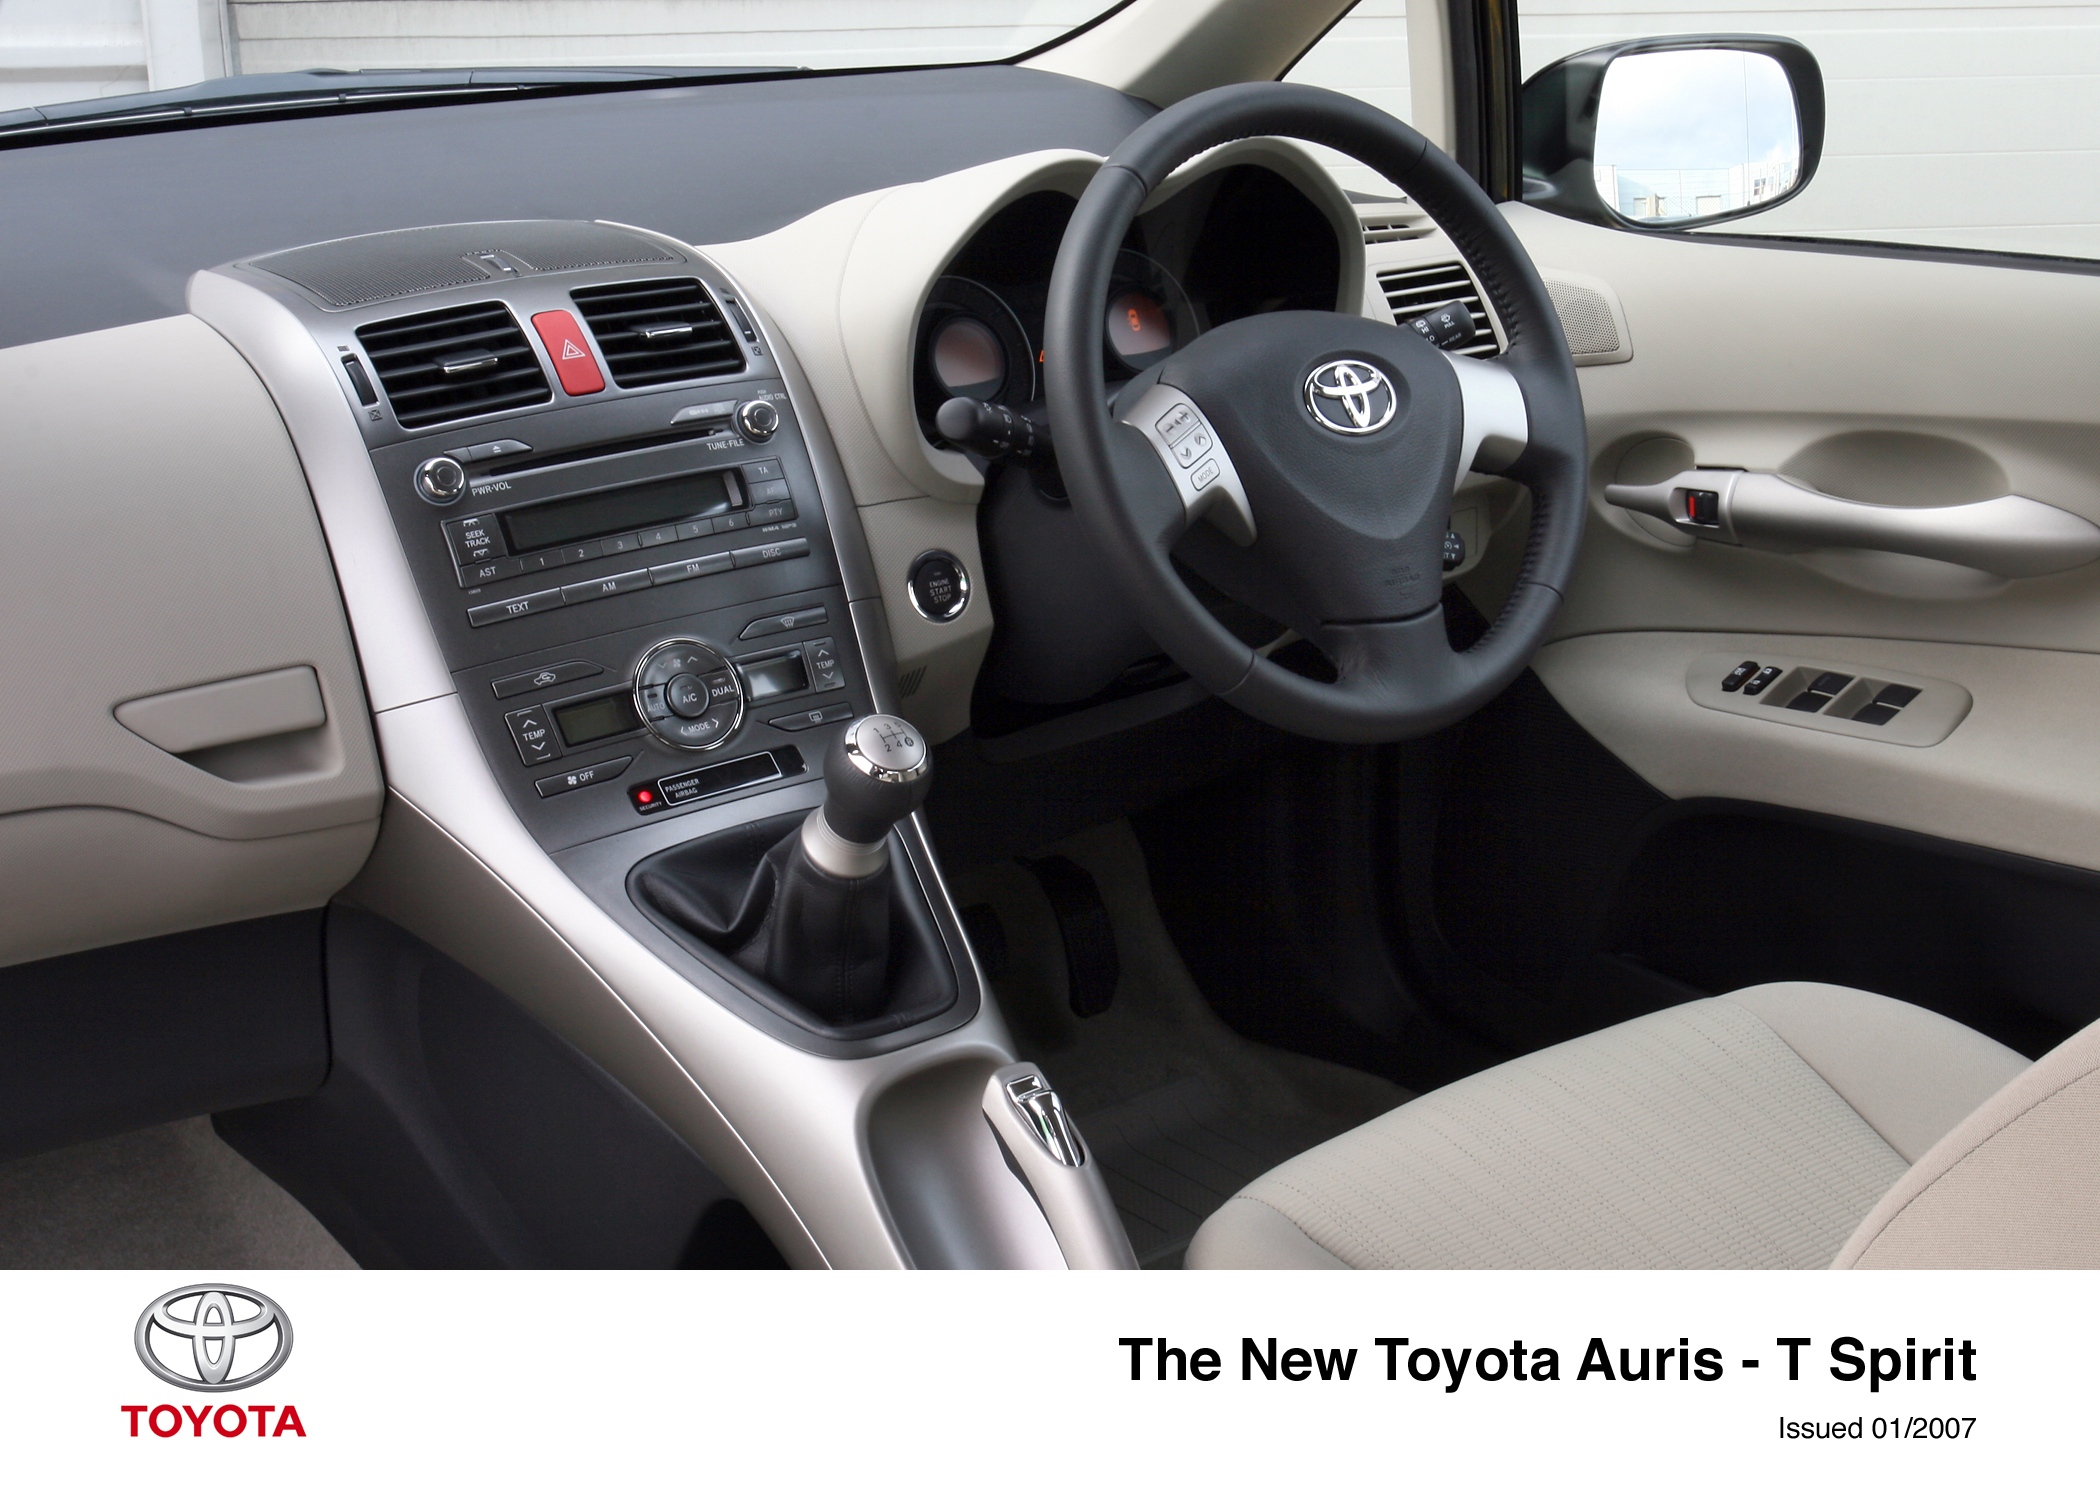 Auris: The New Toyota - Toyota Media Site